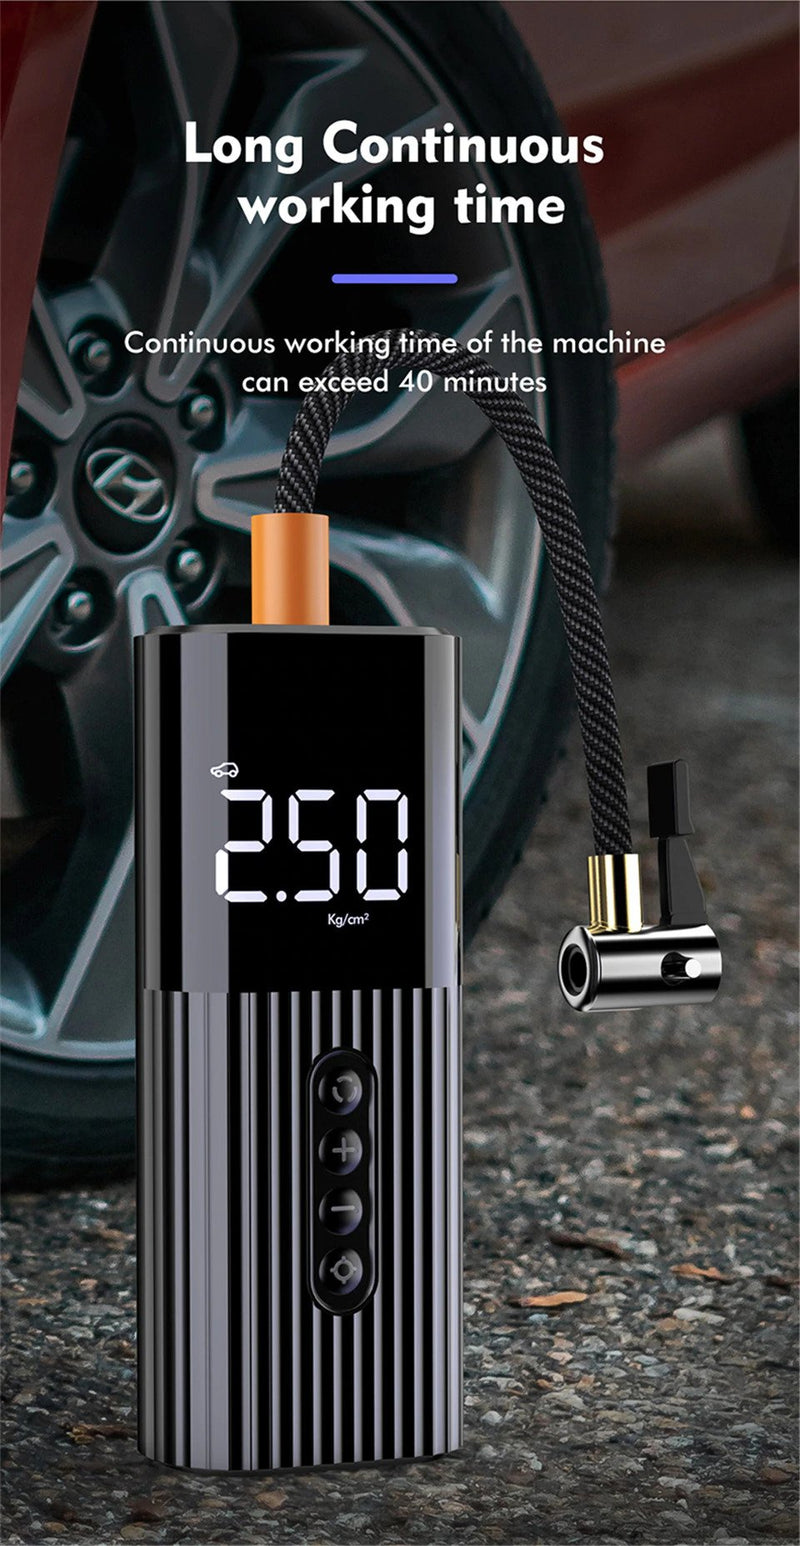 Mini Car/Bike/Motorcycles Air Pump Compressor Digital Wired 60W 12V LED w/Flash Light